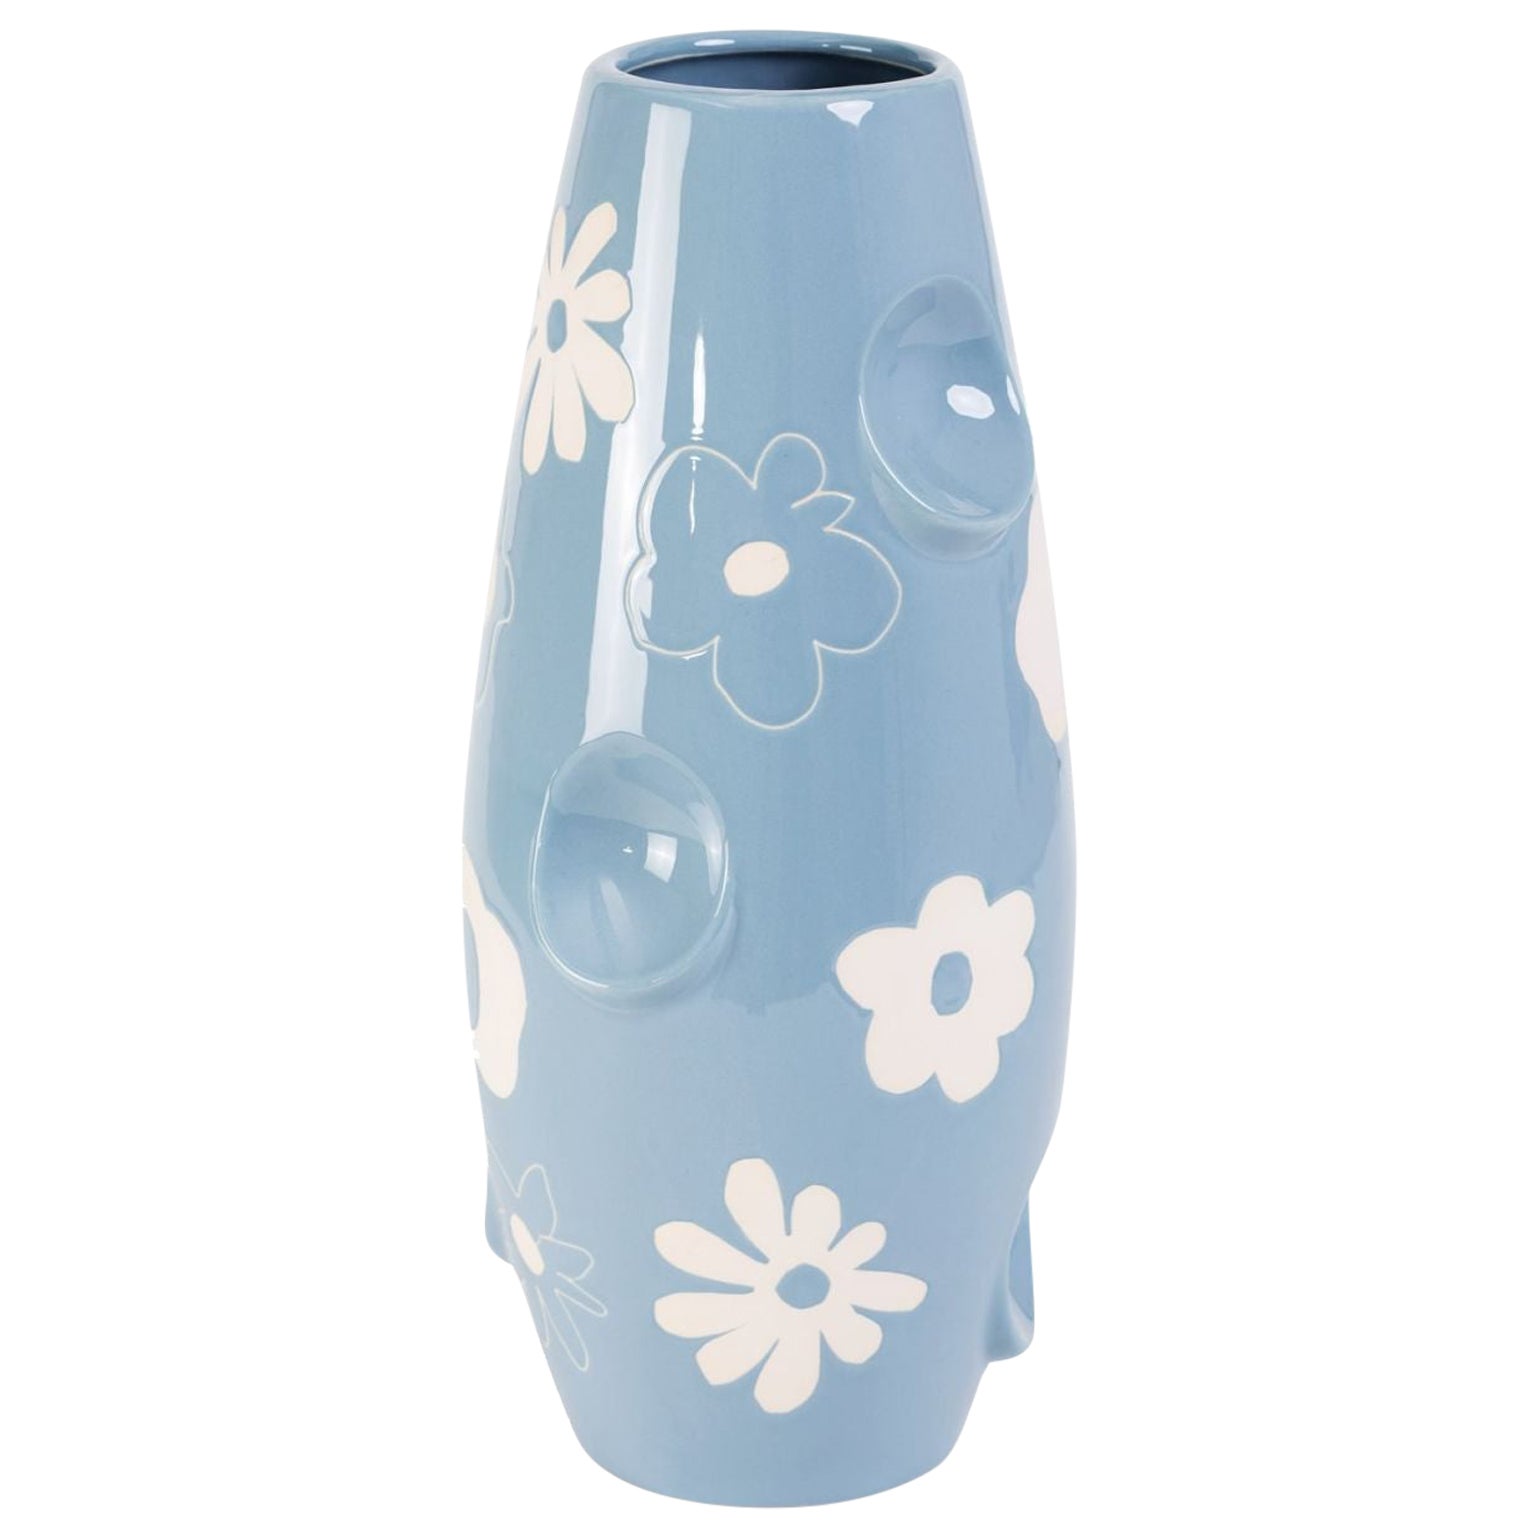 Oko Pop Ceramic Vase, Denim Daisy by Malwina Konopacka